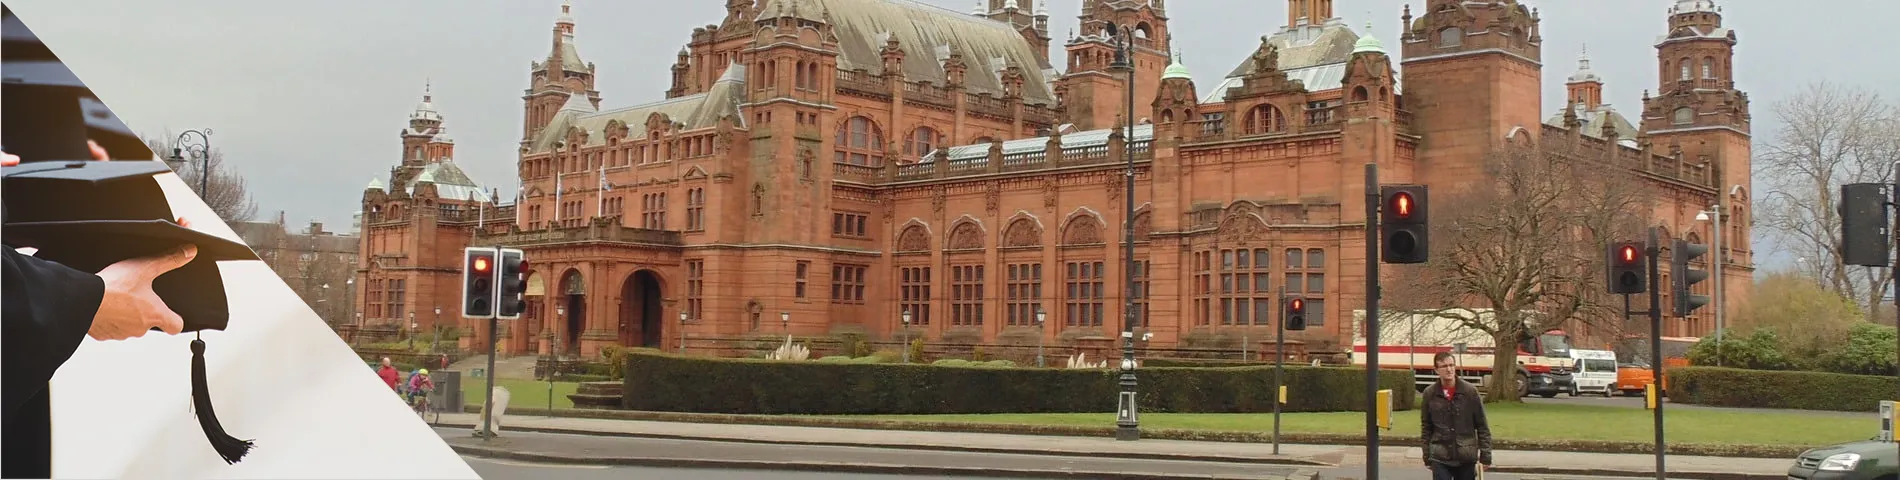 Glasgow - Kursy uniwersyteckie